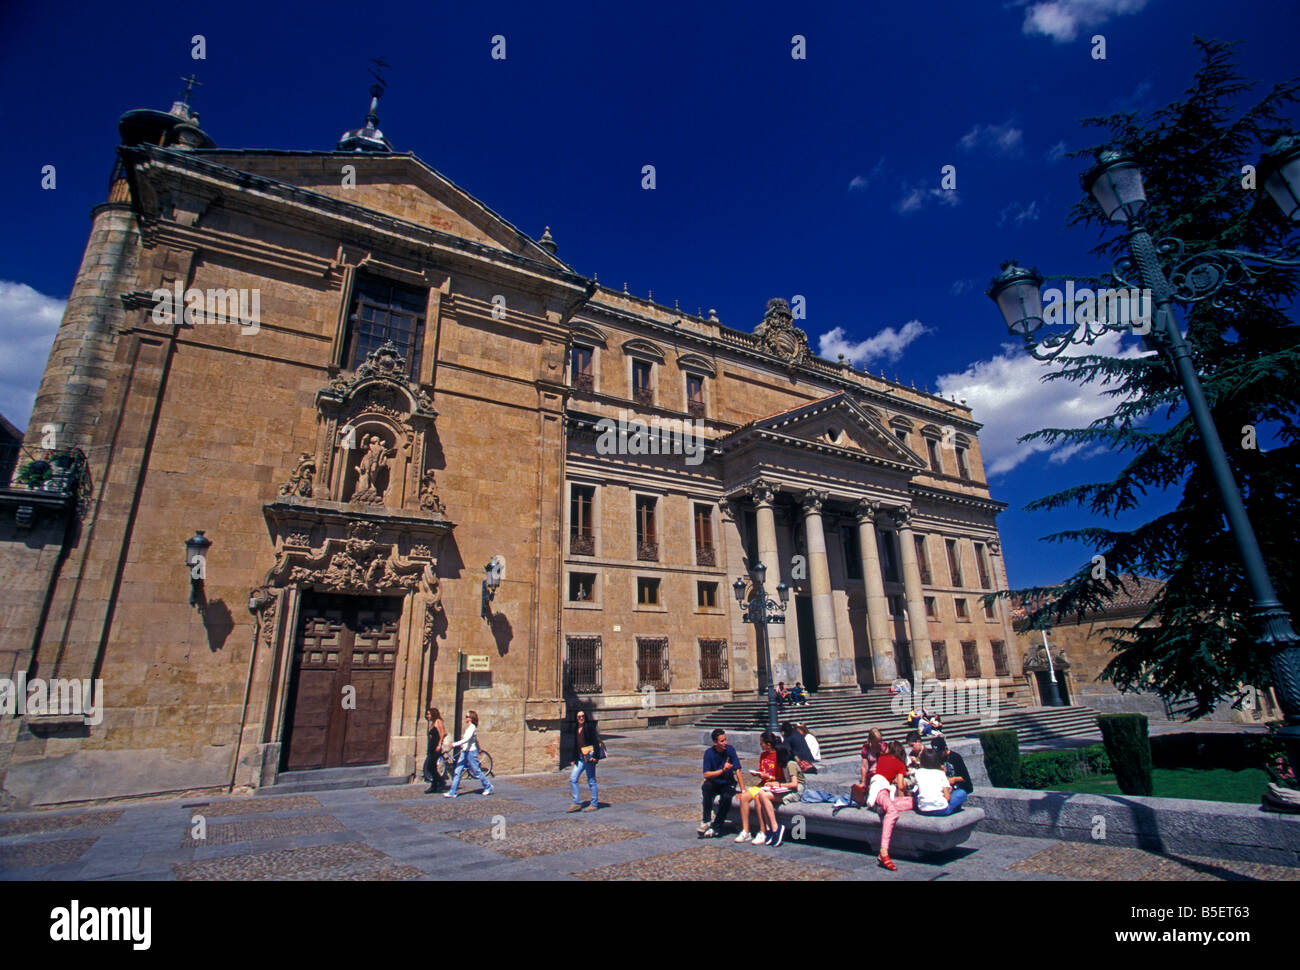 Spanish people, plaza, Anaya College, Salamanca, Salamanca Province, Castile and Leon, Spain, Europe Stock Photo